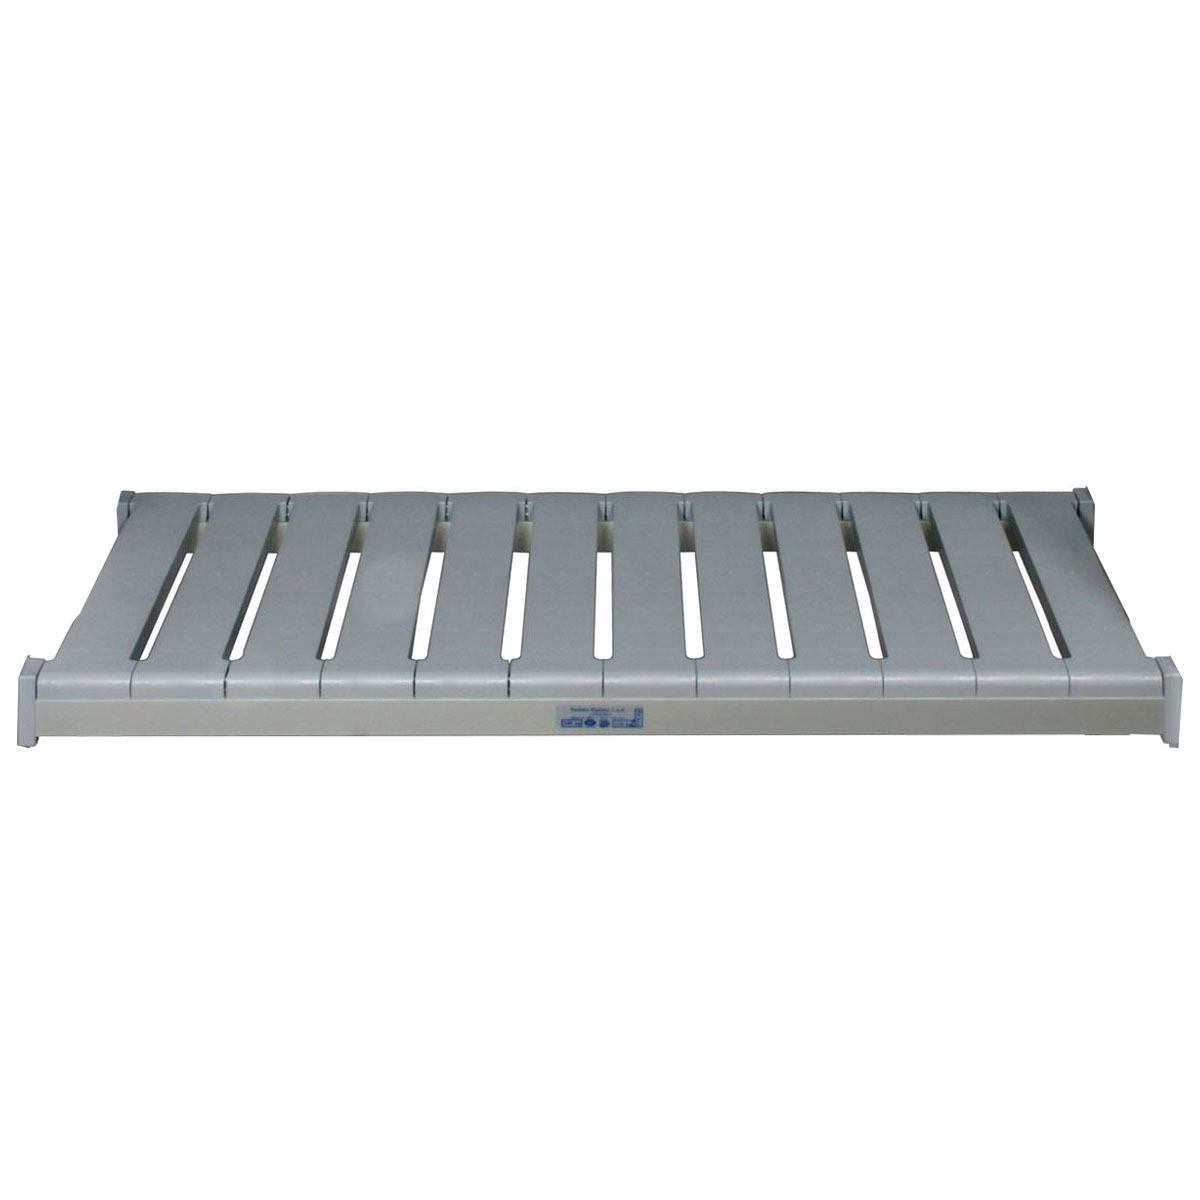 Eko Fit Polymer Range Additional Shelf - W1220 x D375mm - KFS462